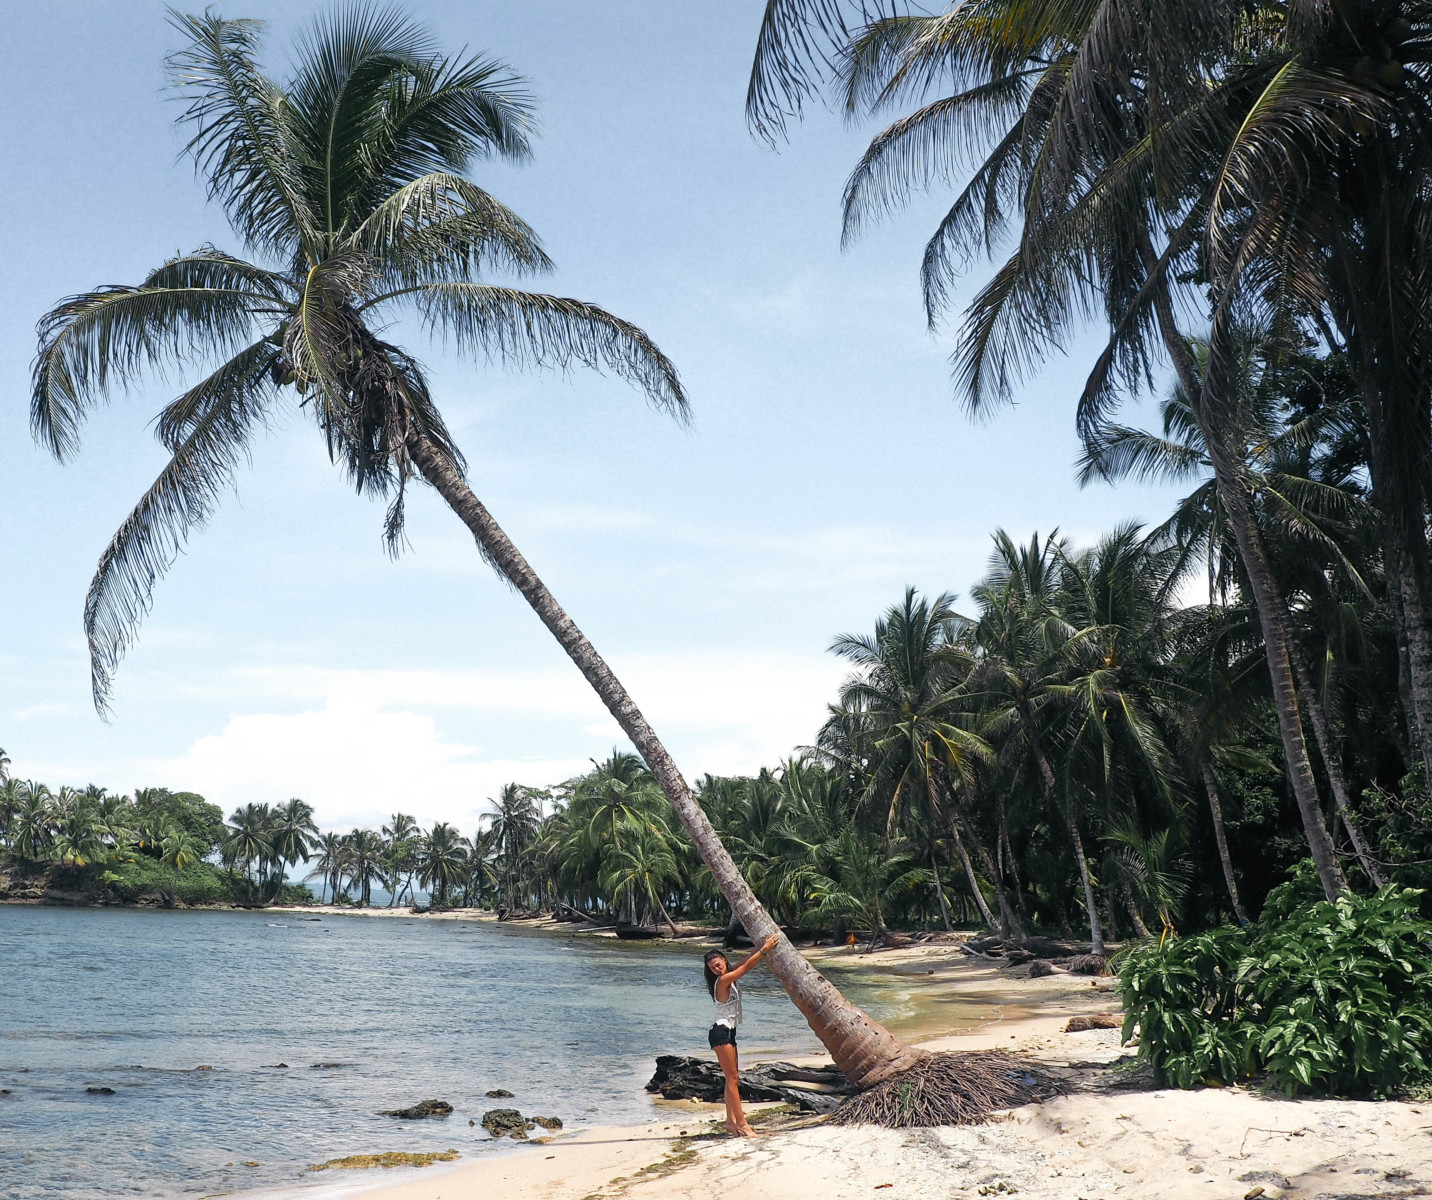 Palms on Carenero beach